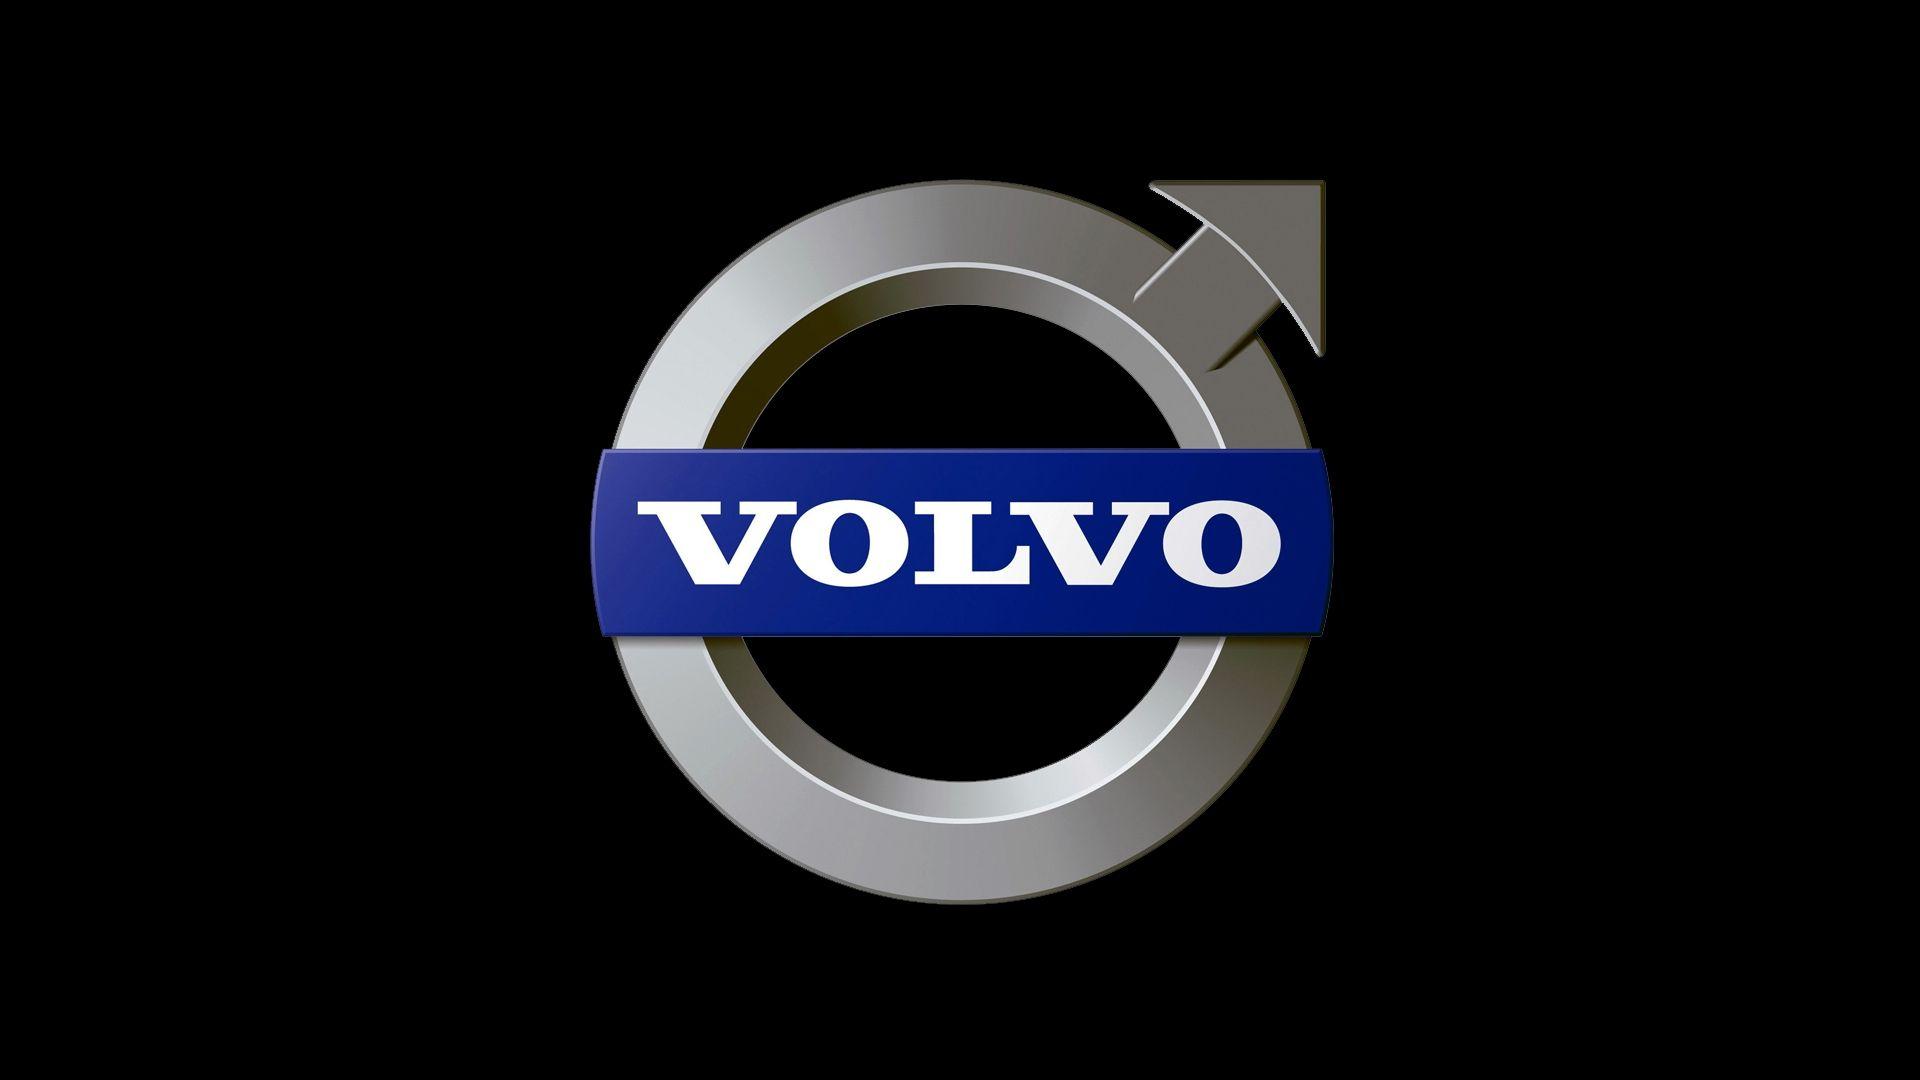 Volvo Logo Wallpaper Full HD #ARO. Cars. Volvo, Audi, Cars